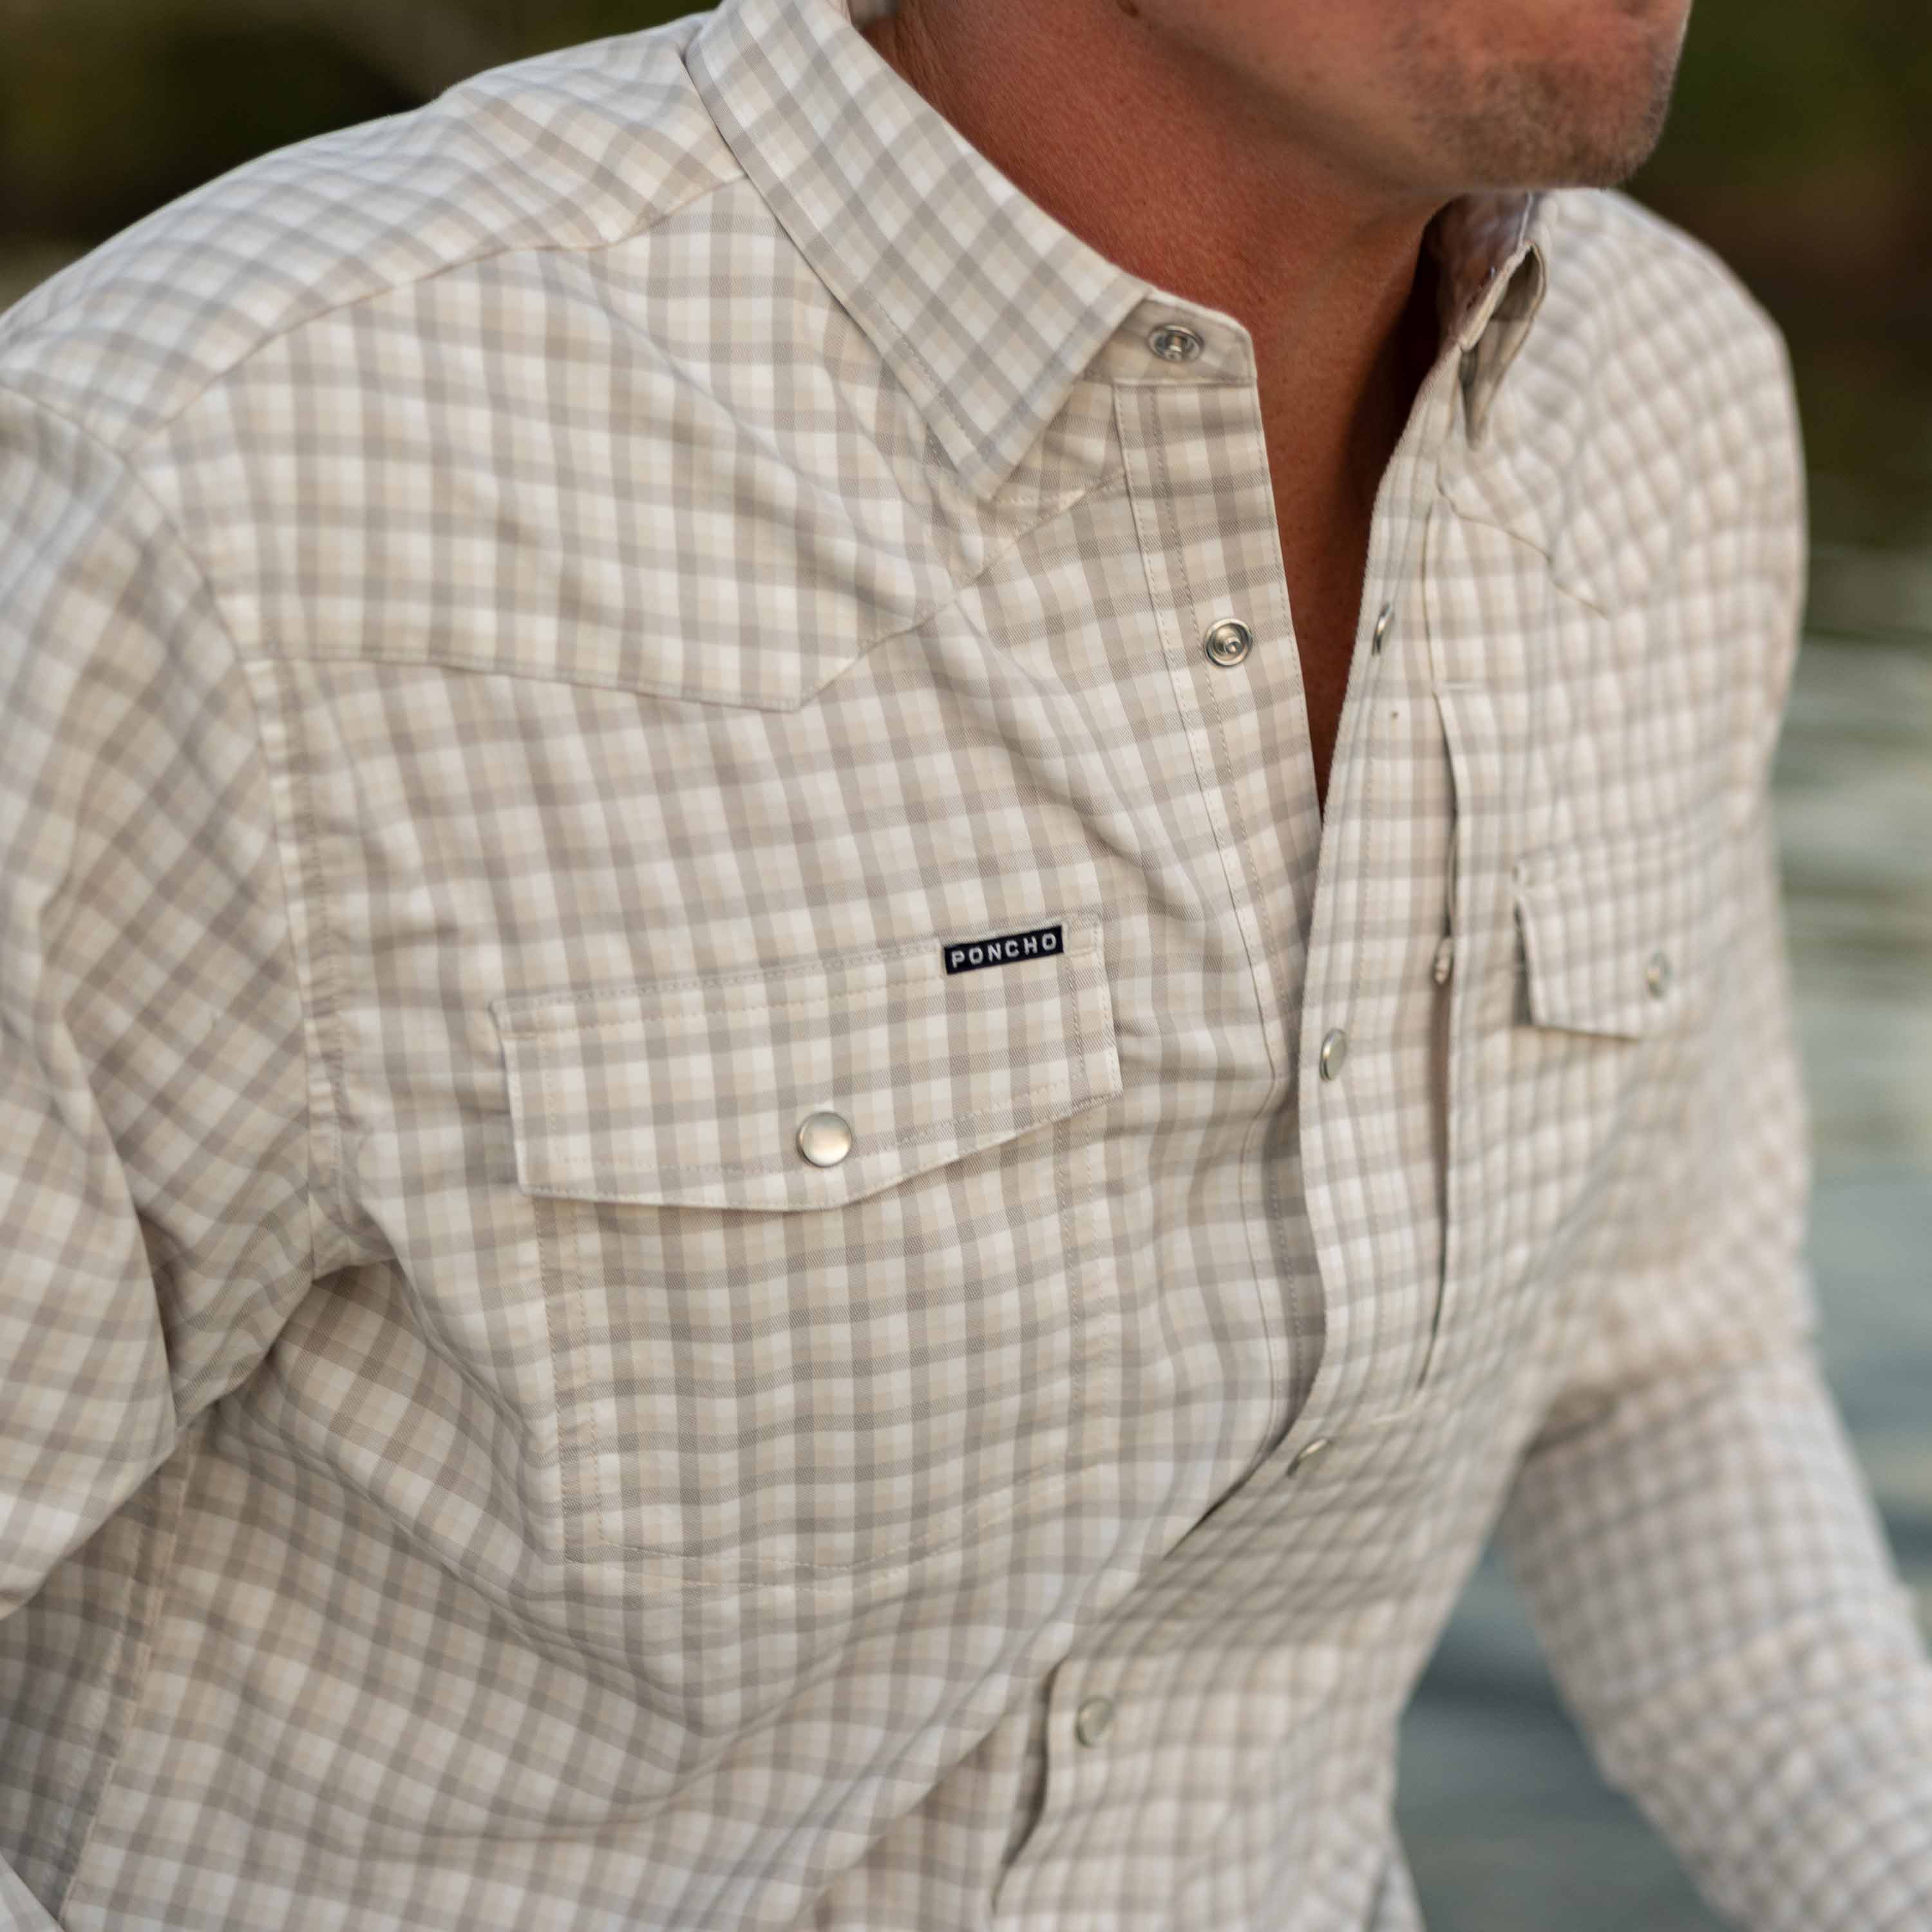 closeup of chest pocket on man wearing shirt